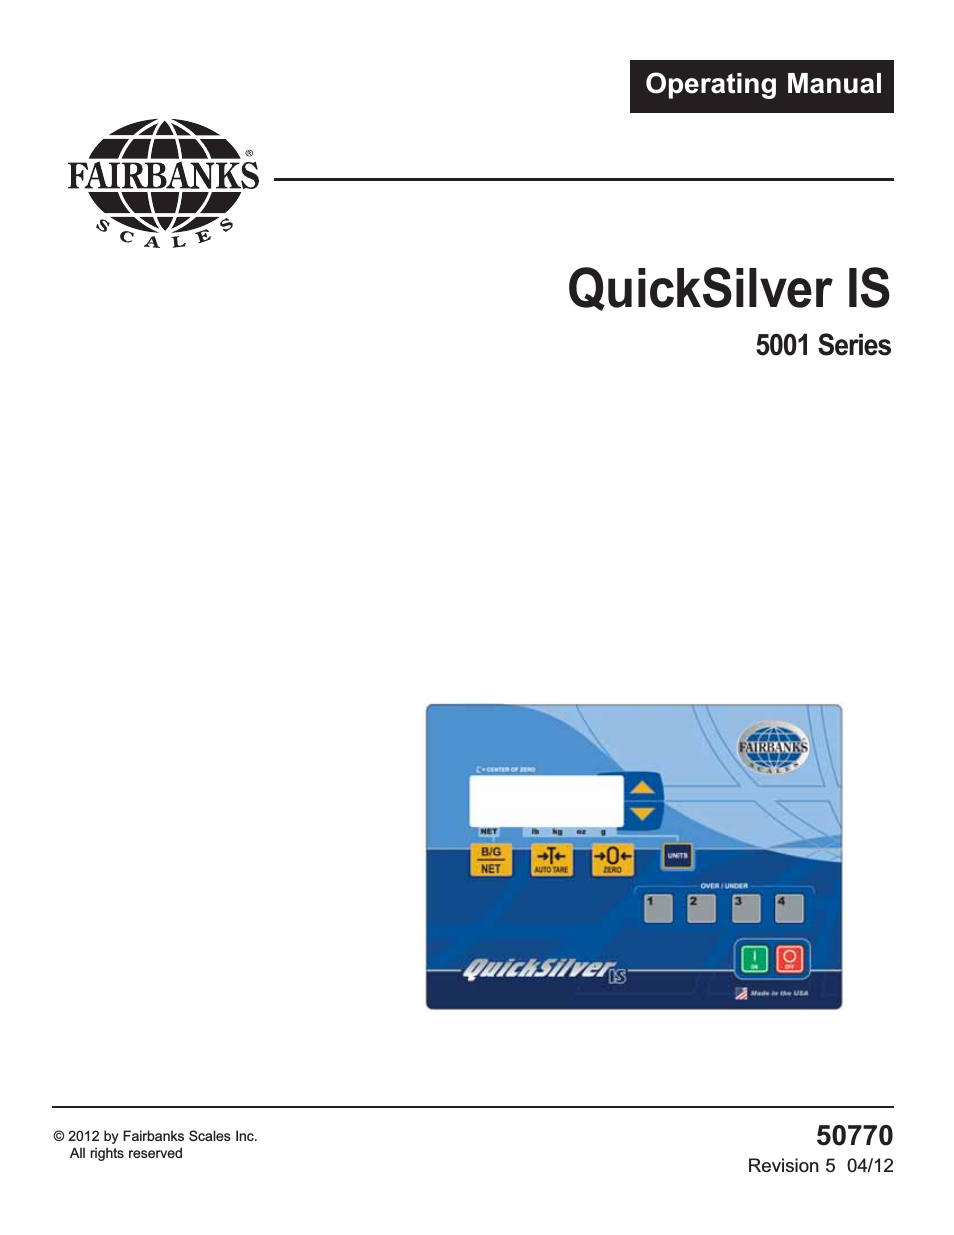 5001 Series QuickSilver IS